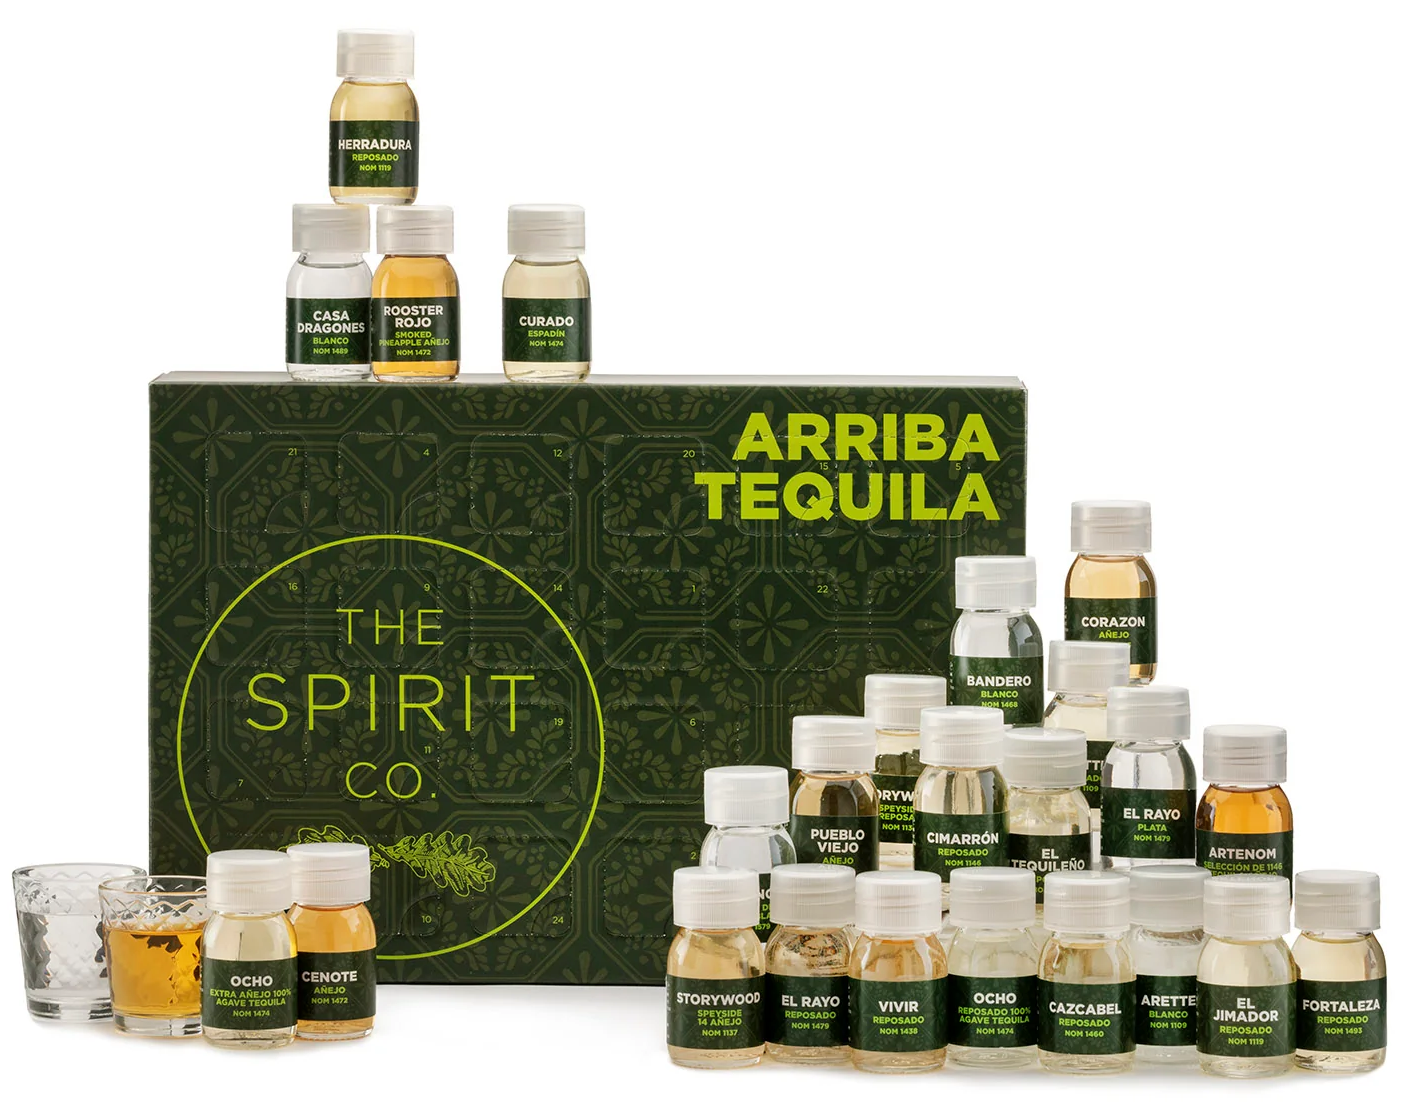 The Spirit & Co Spicers of Hythe Ltd - Arriba Tequila Advent Calendar - Inhalt Content (EN)